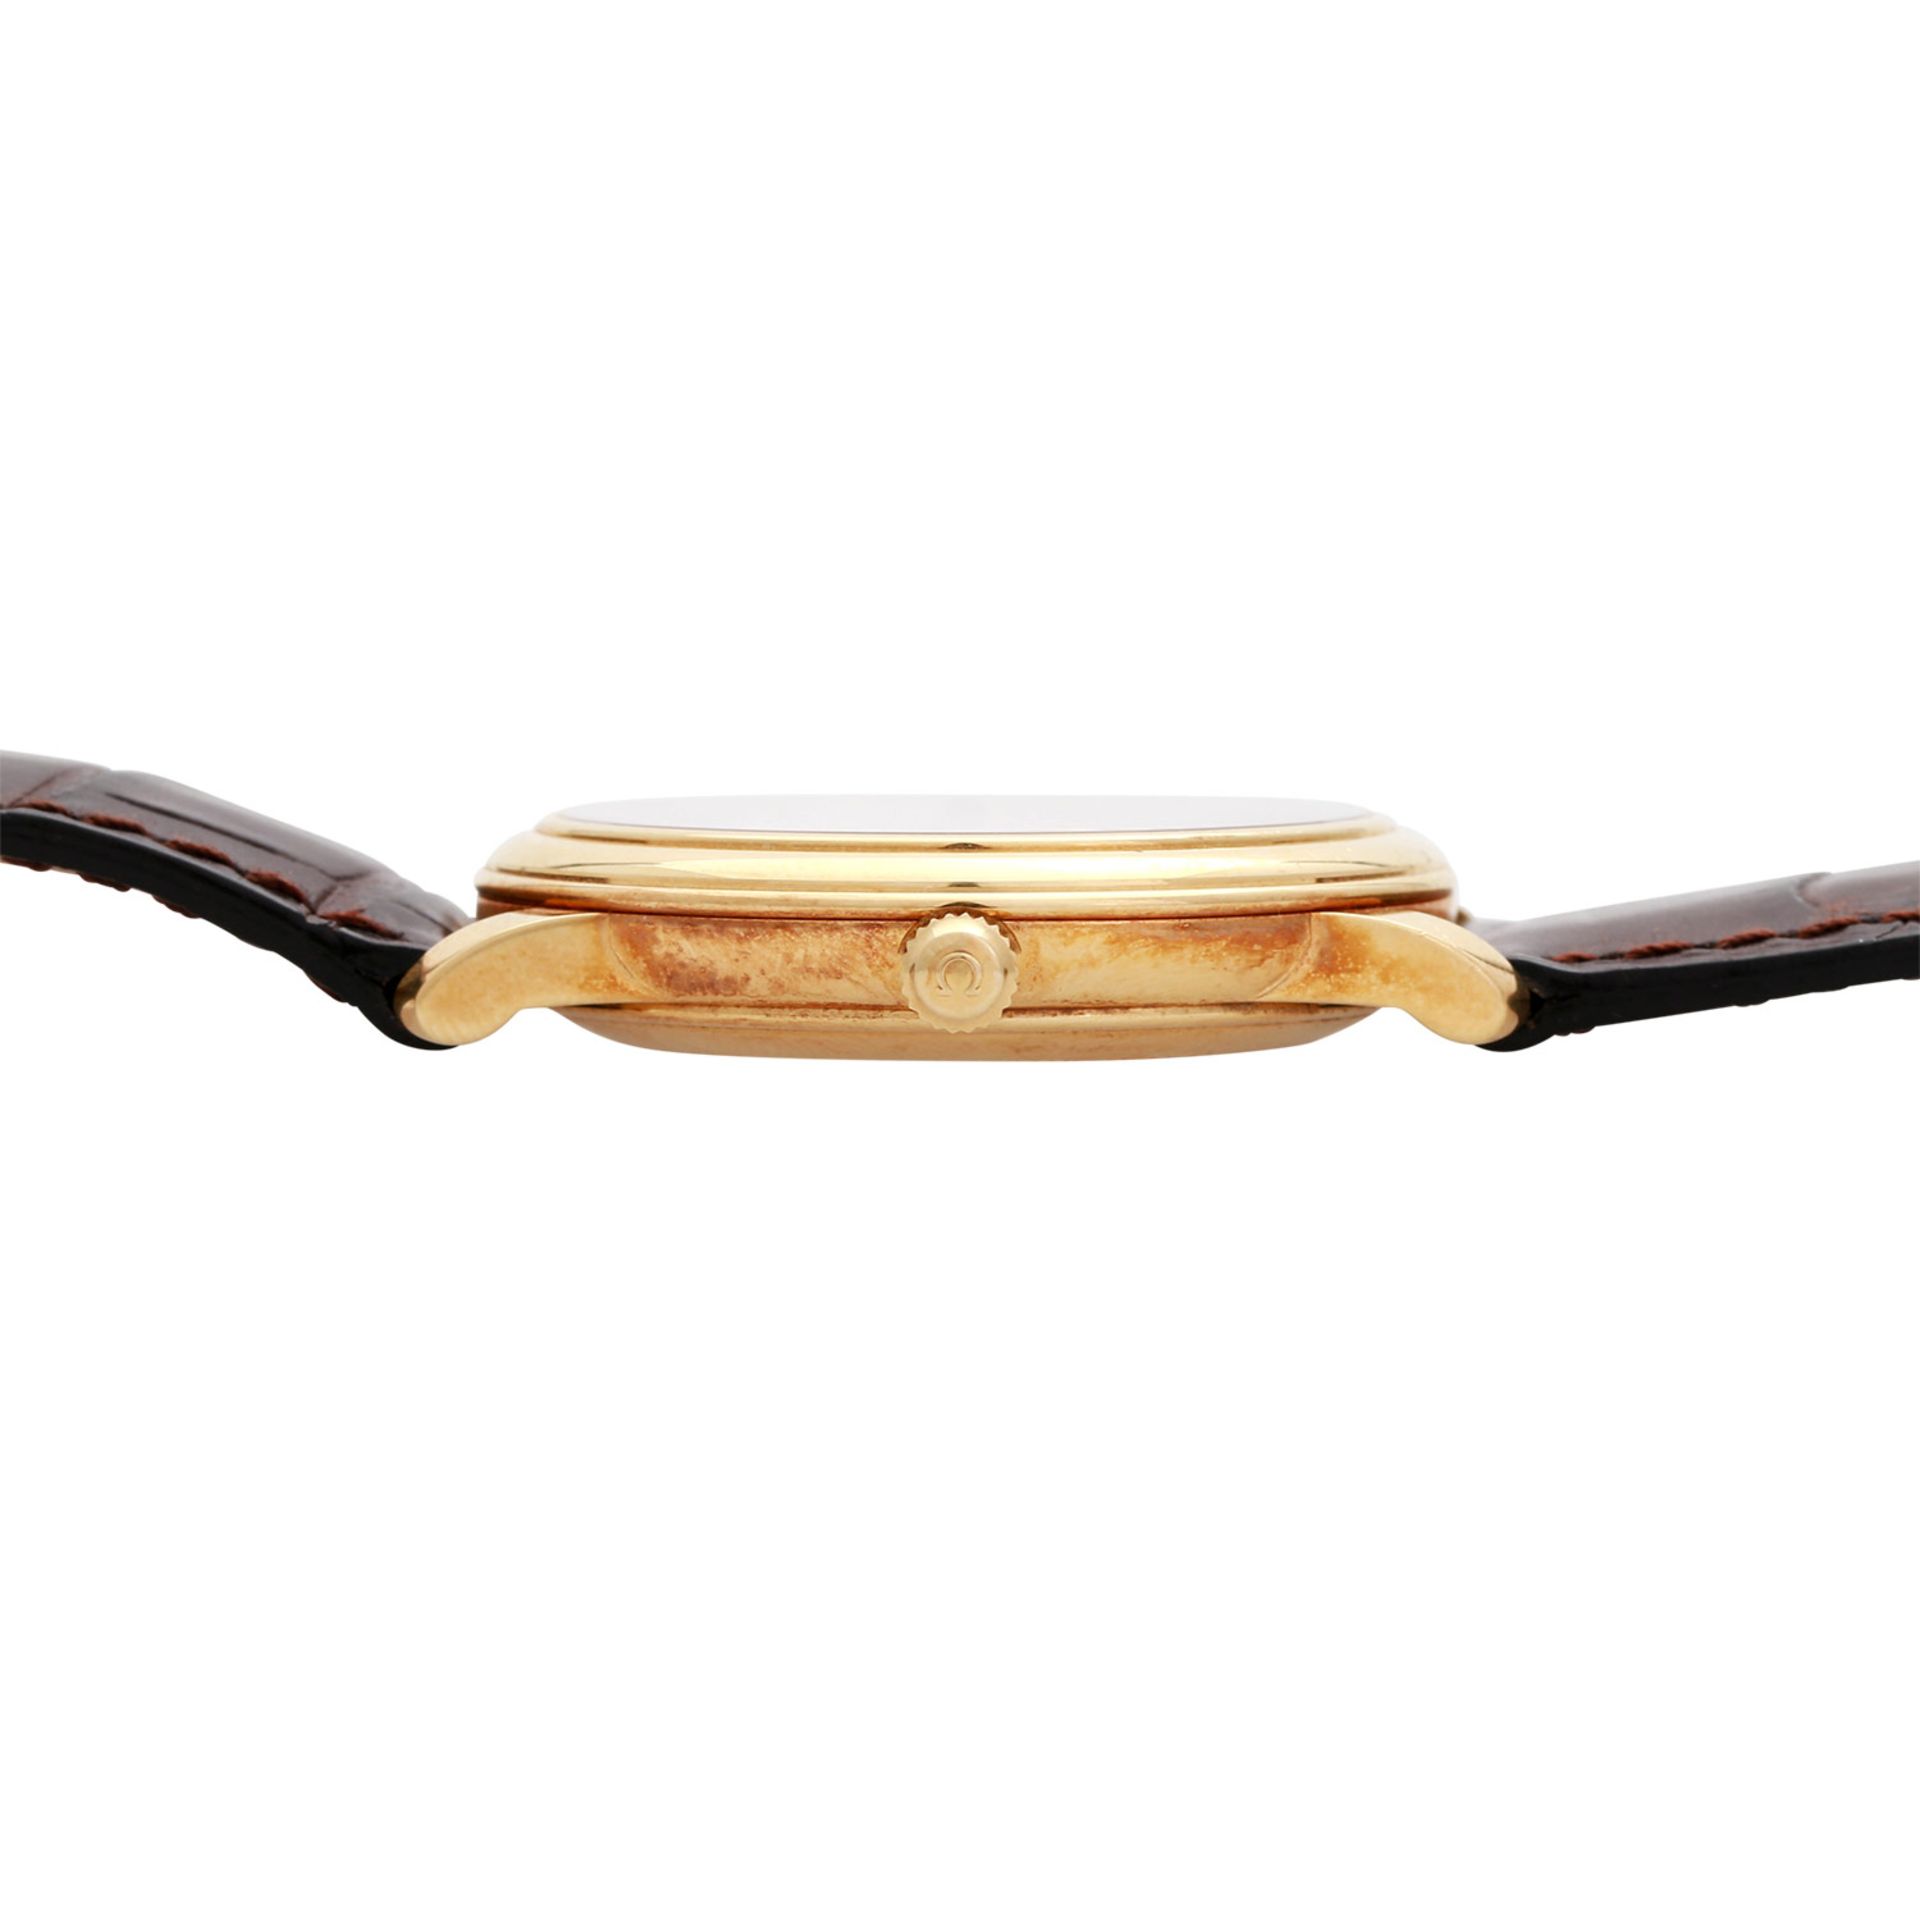 OMEGA De Ville "Dresswatch" Armbanduhr, Ref. 168.1050, ca. 1990/2000er Jahre. Gold 18K. Automatic- - Bild 3 aus 4